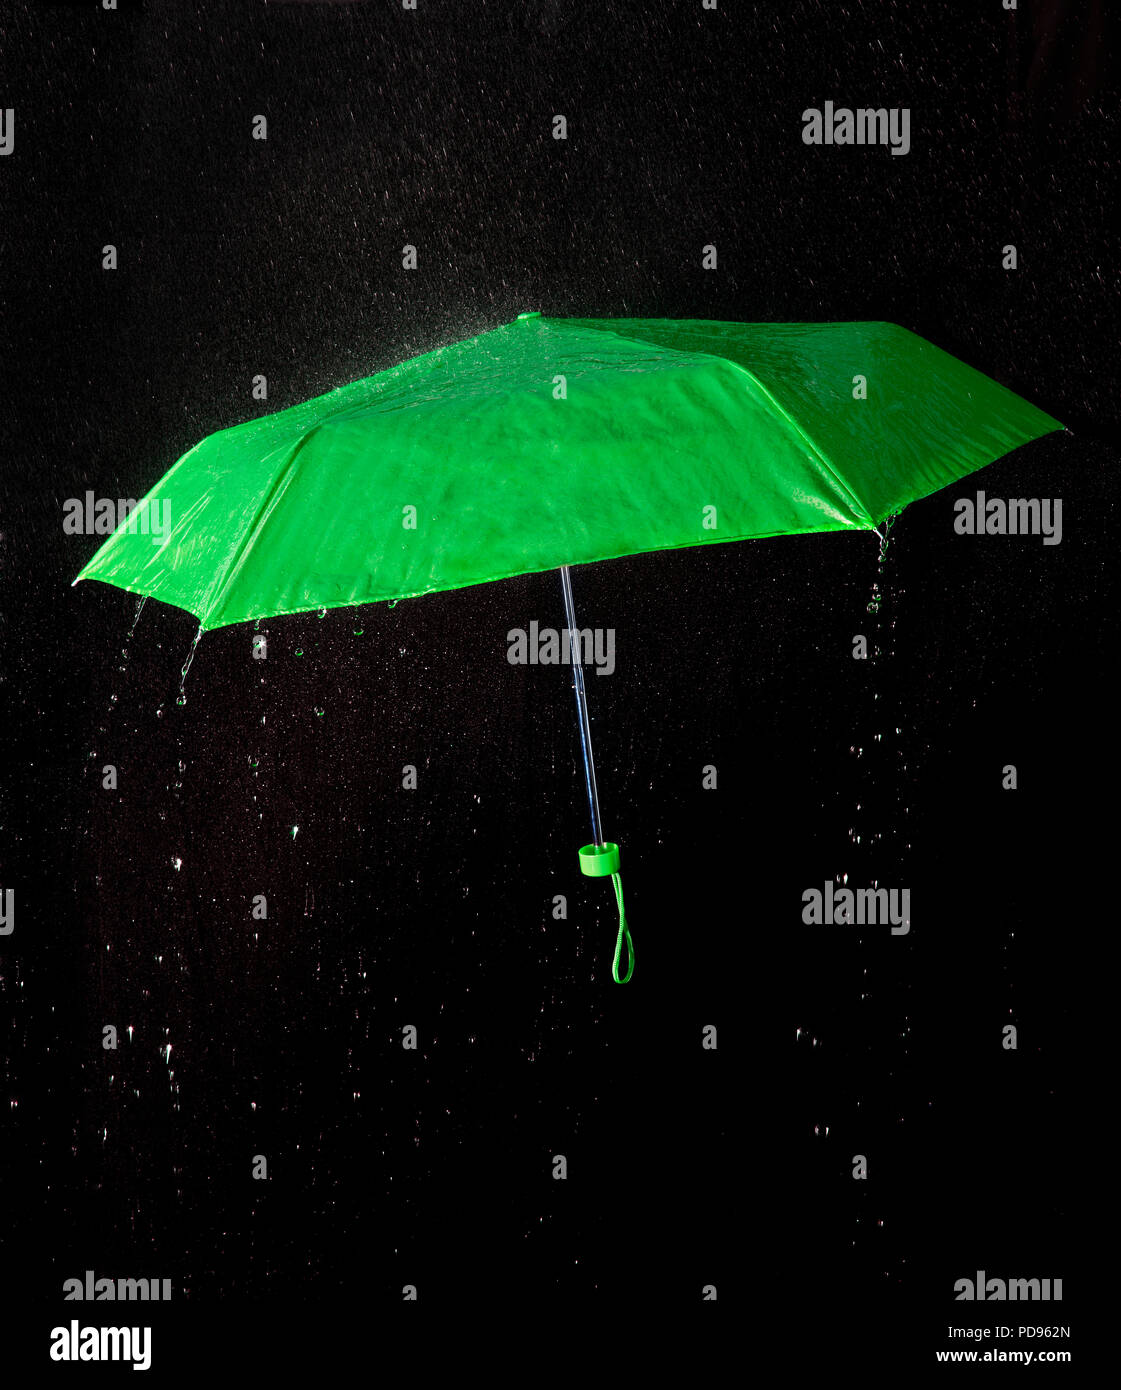 Umbrella in the rain on black Stock Photo